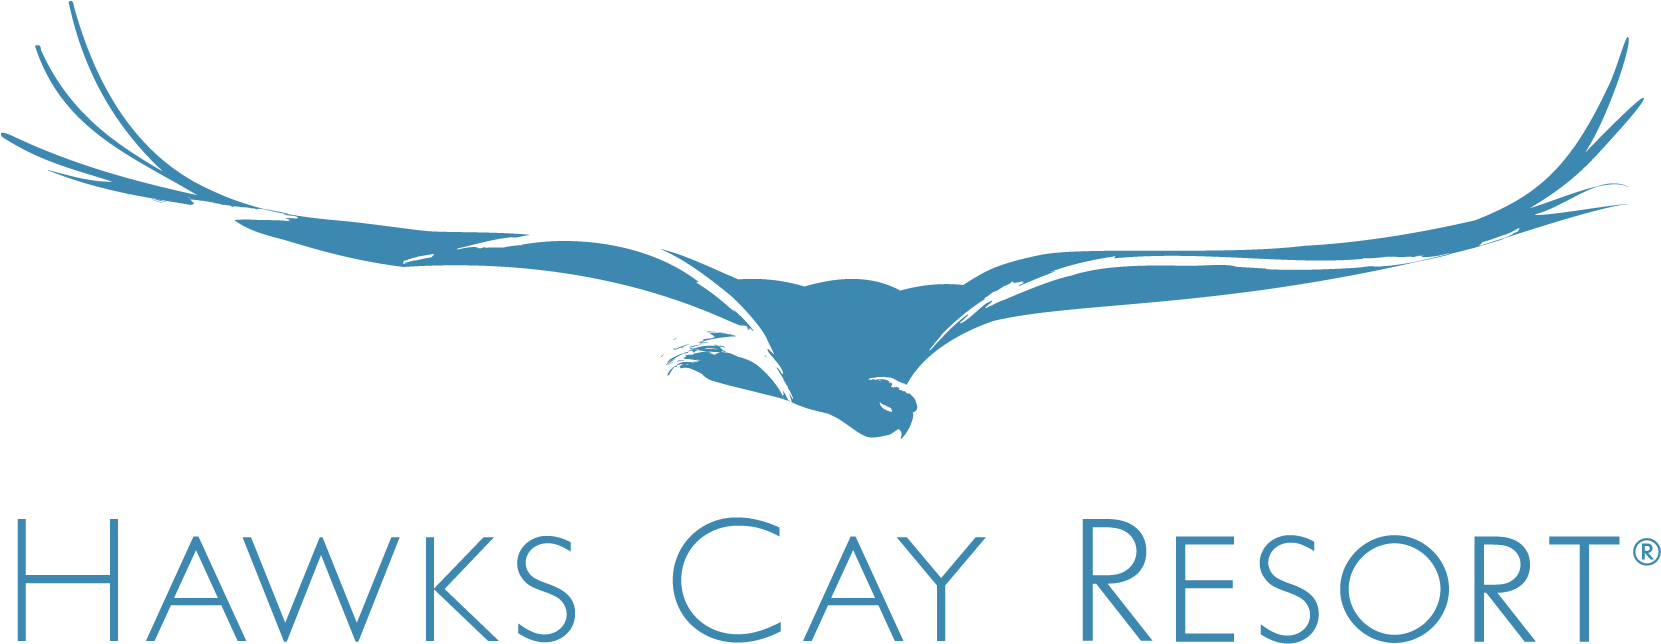 Logo For Hawks Cay Resort - Hawks Cay Resort Logo (1660x679)